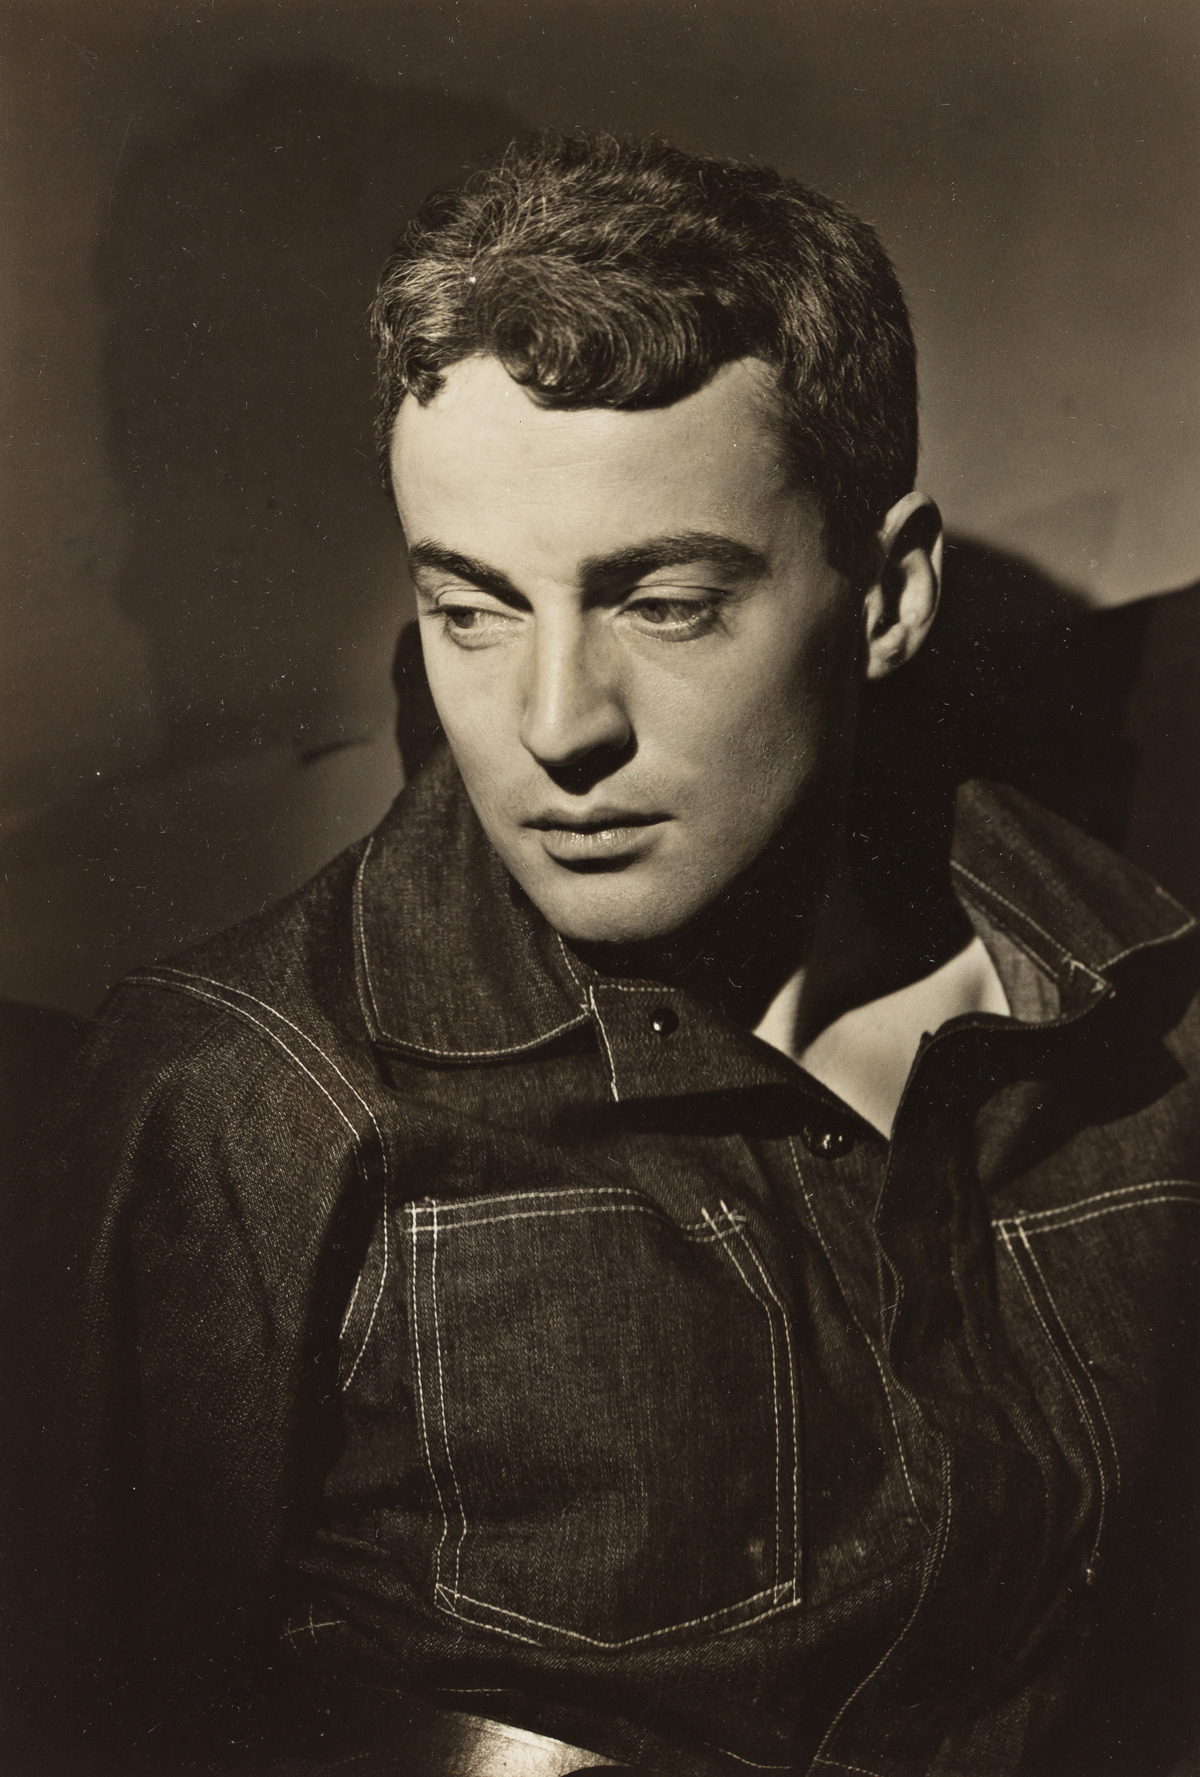 GEORGE HOYNINGEN-HUENE (1900-1968) Portrait of George Platt Lynes.